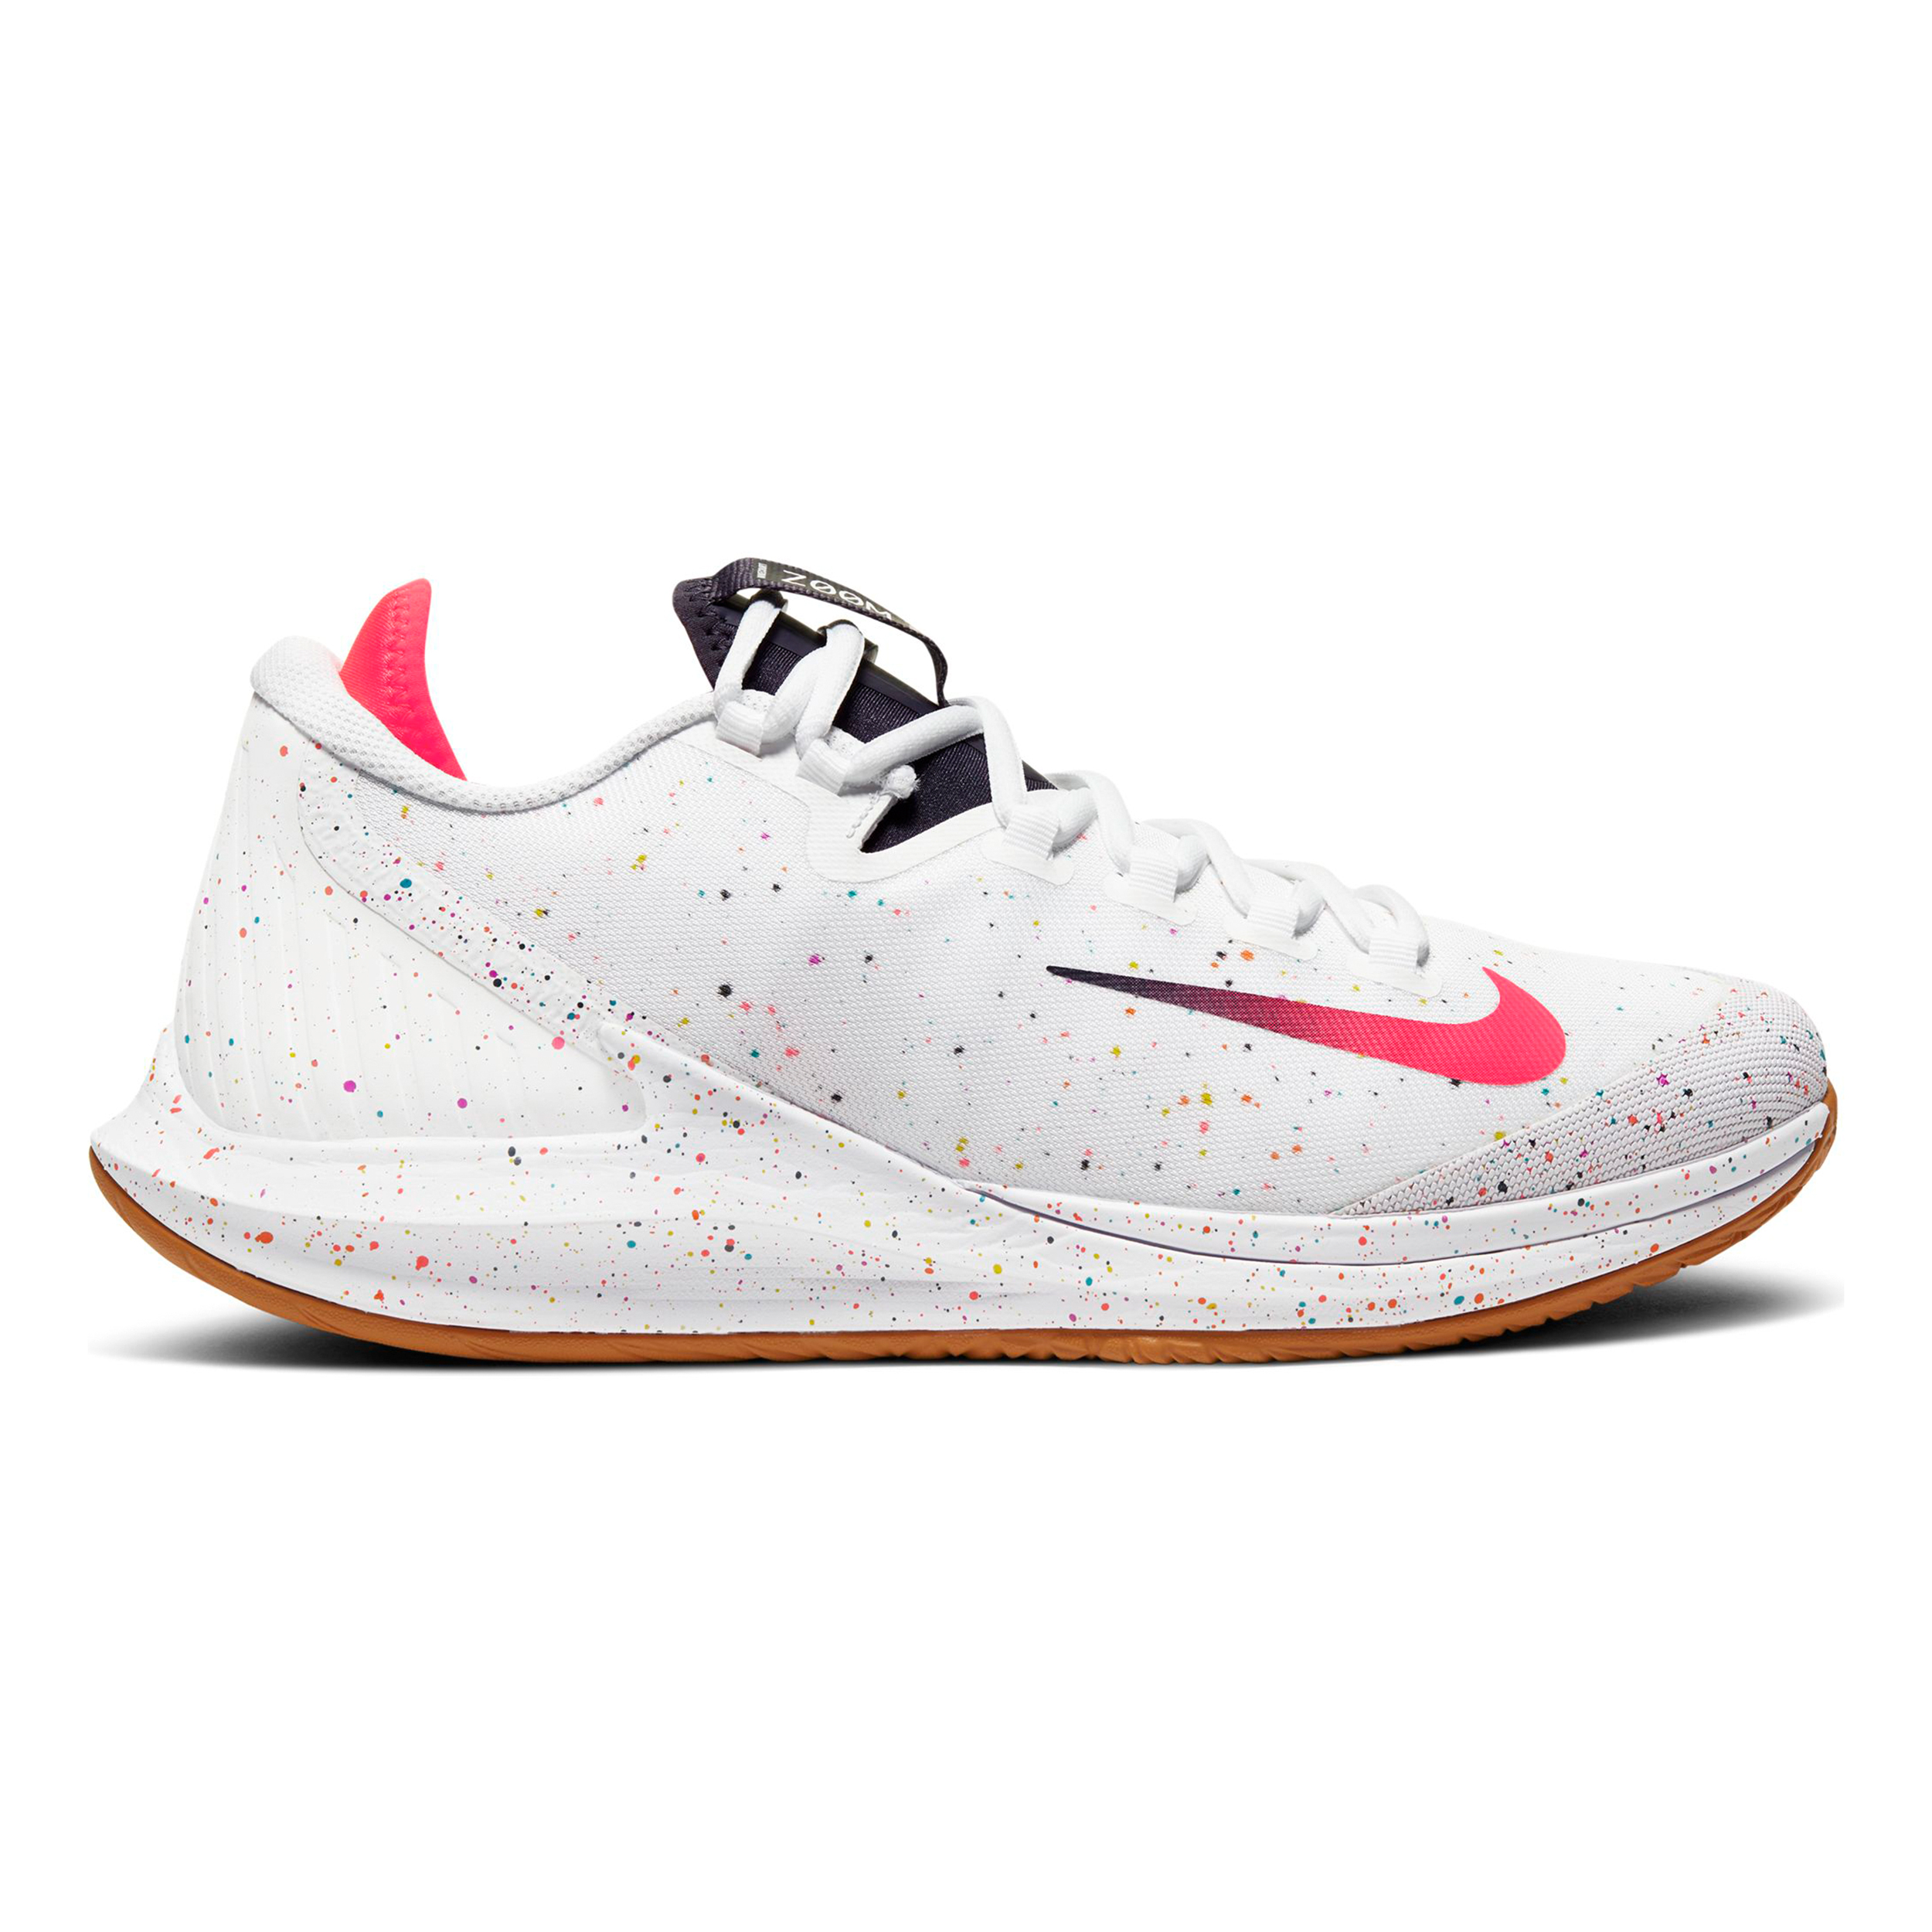 Mareo tema Ciego Nike-melbourne-styles-2020 compra online | Tennis-Point